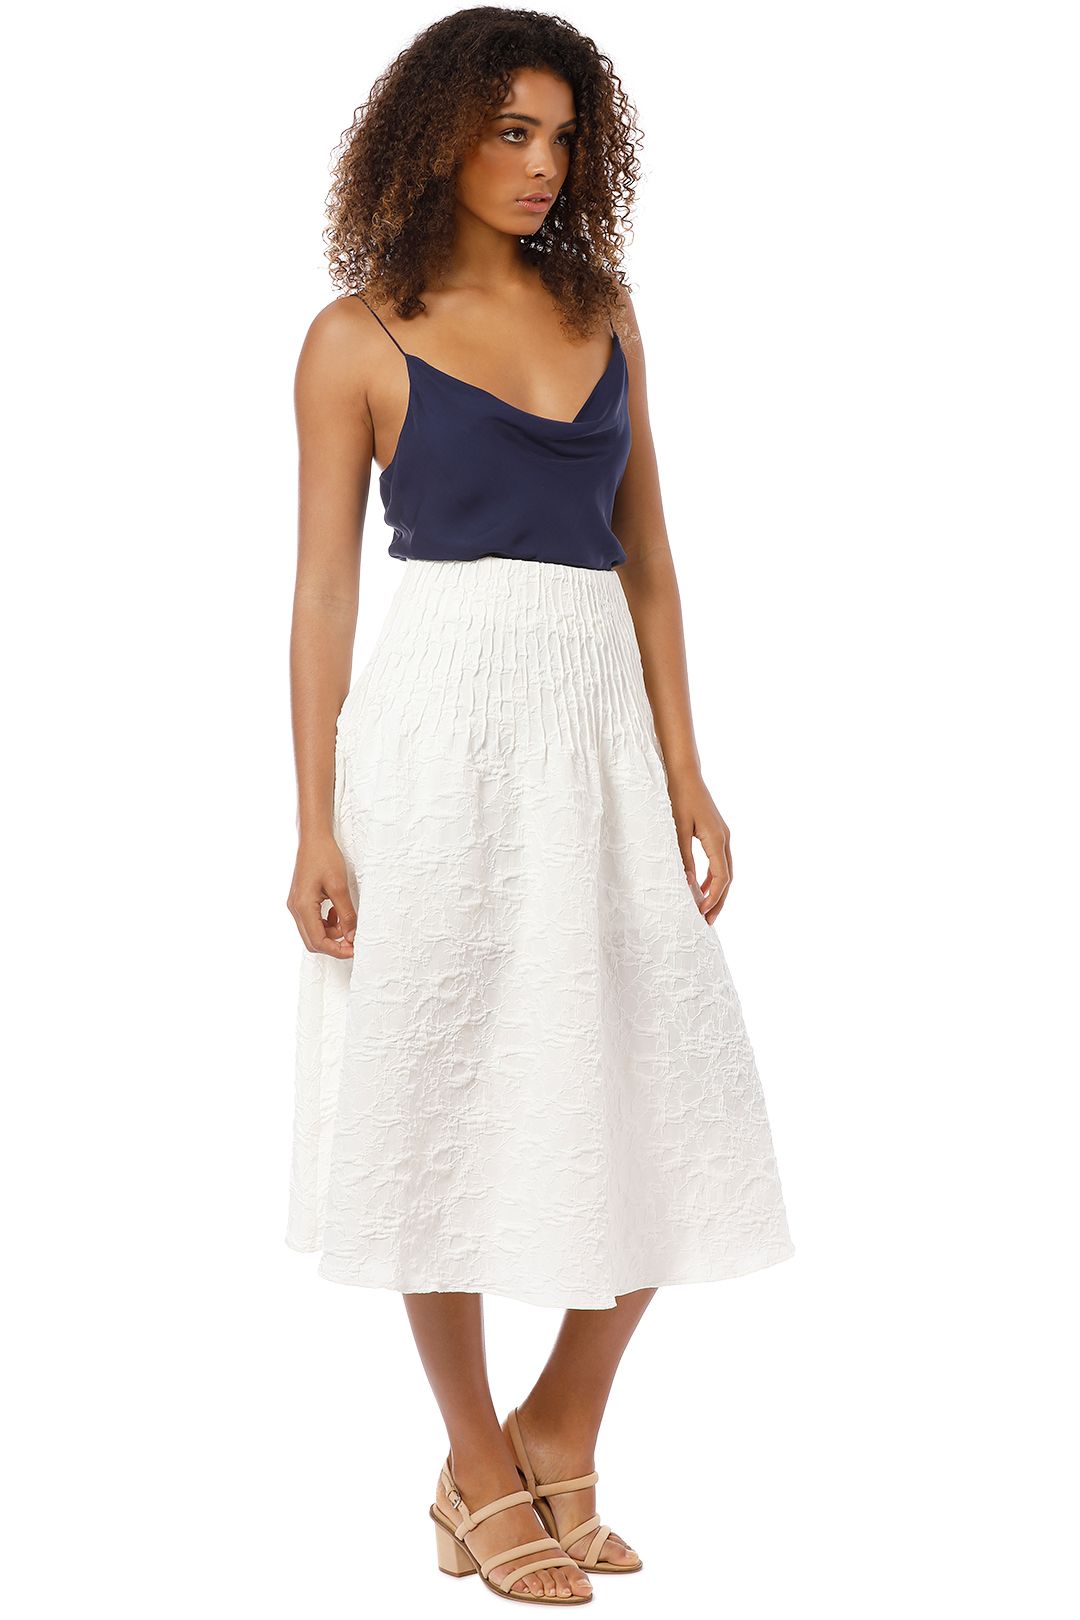 Friend of Audrey - Brooke Textured Full Skirt - White - Side